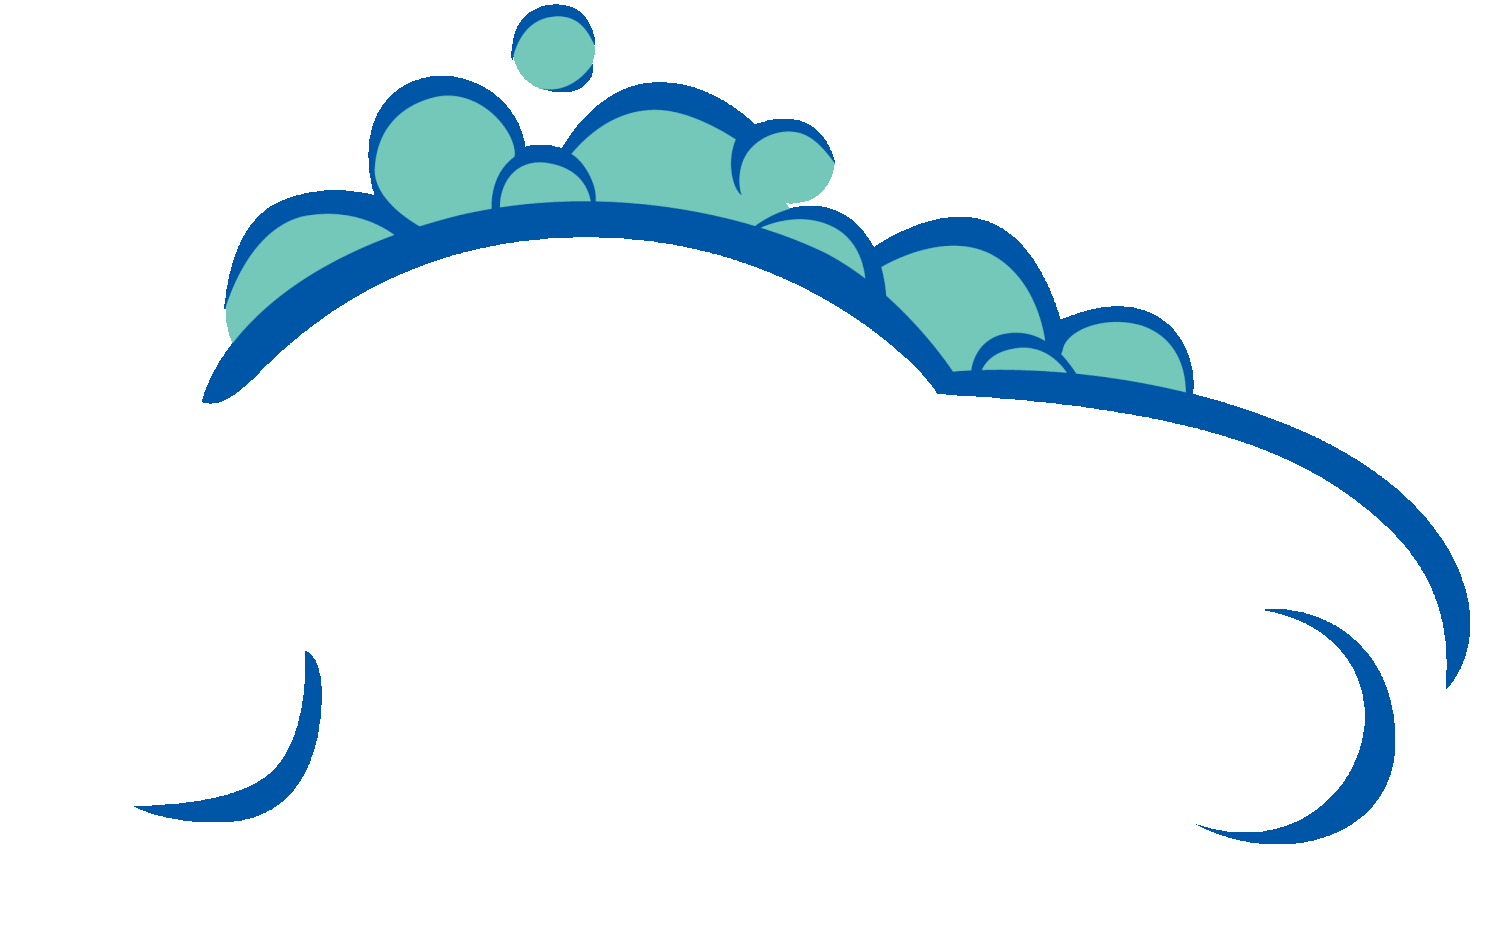 Carwash Company